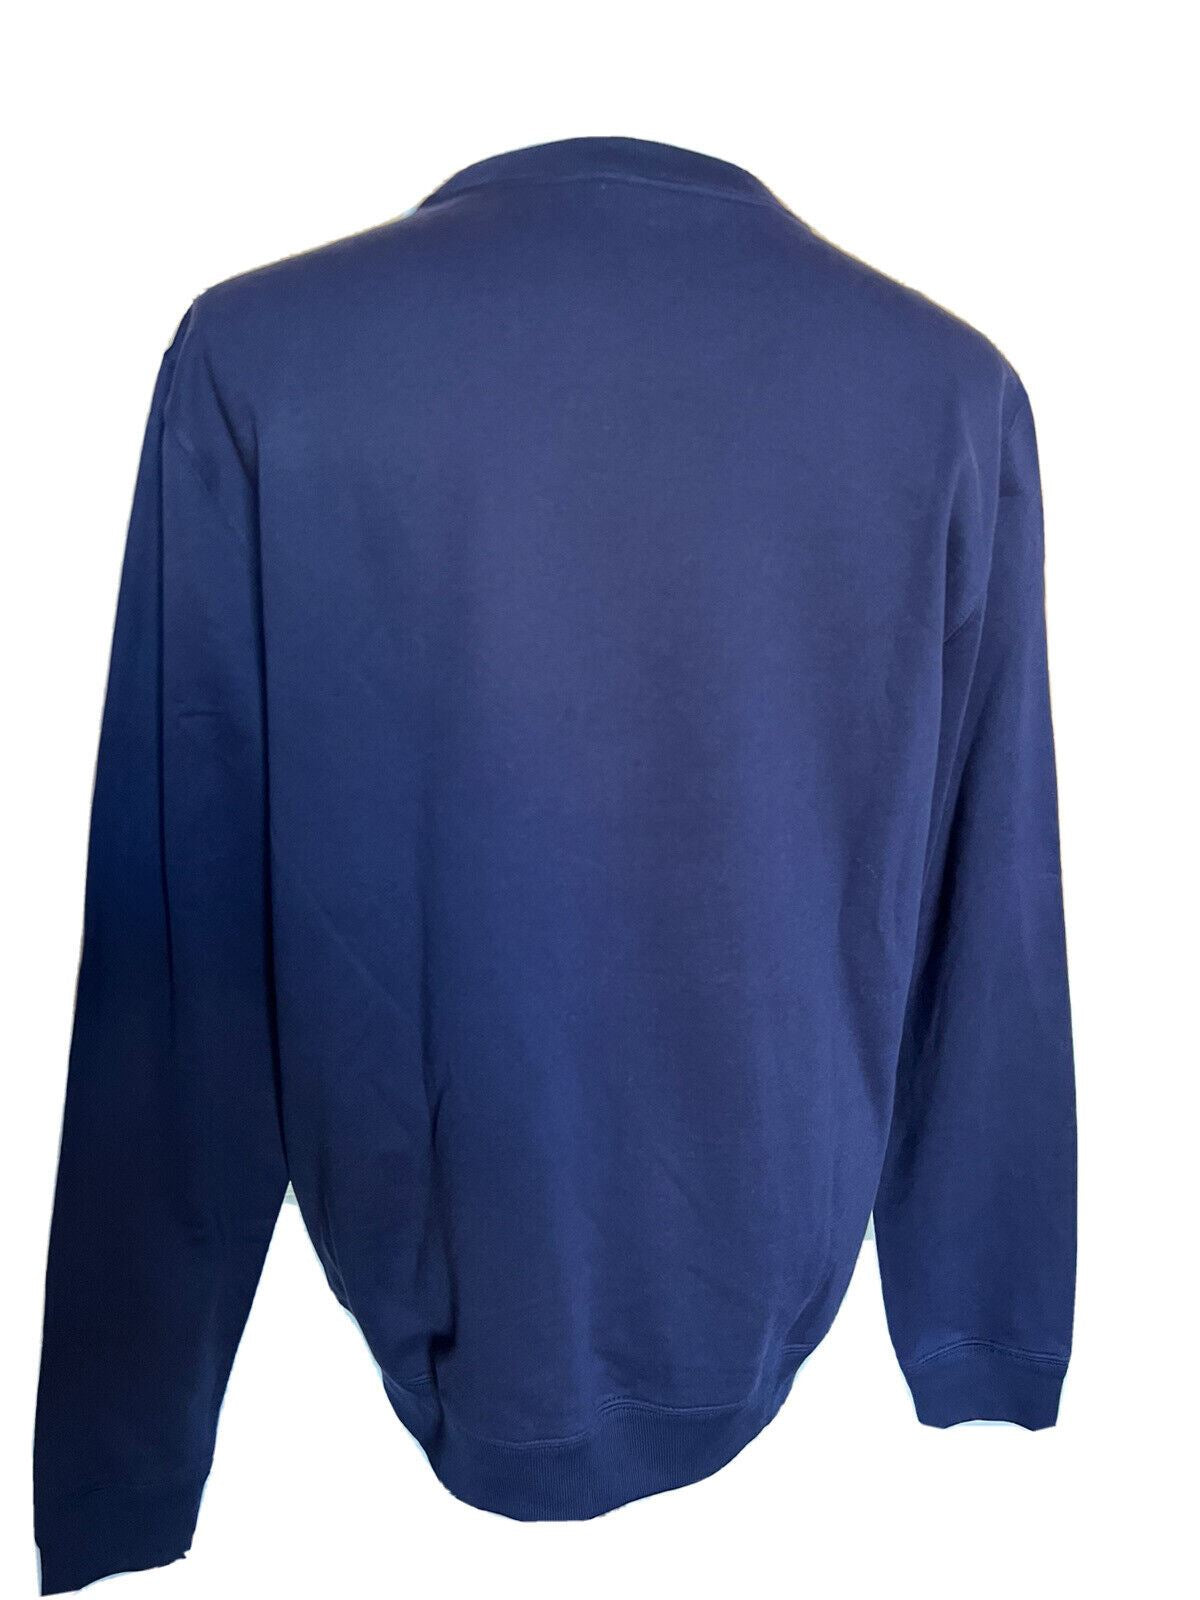 NWT $525 Versace Мужская толстовка с длинным рукавом синяя, размер 3XL A85327 Италия 